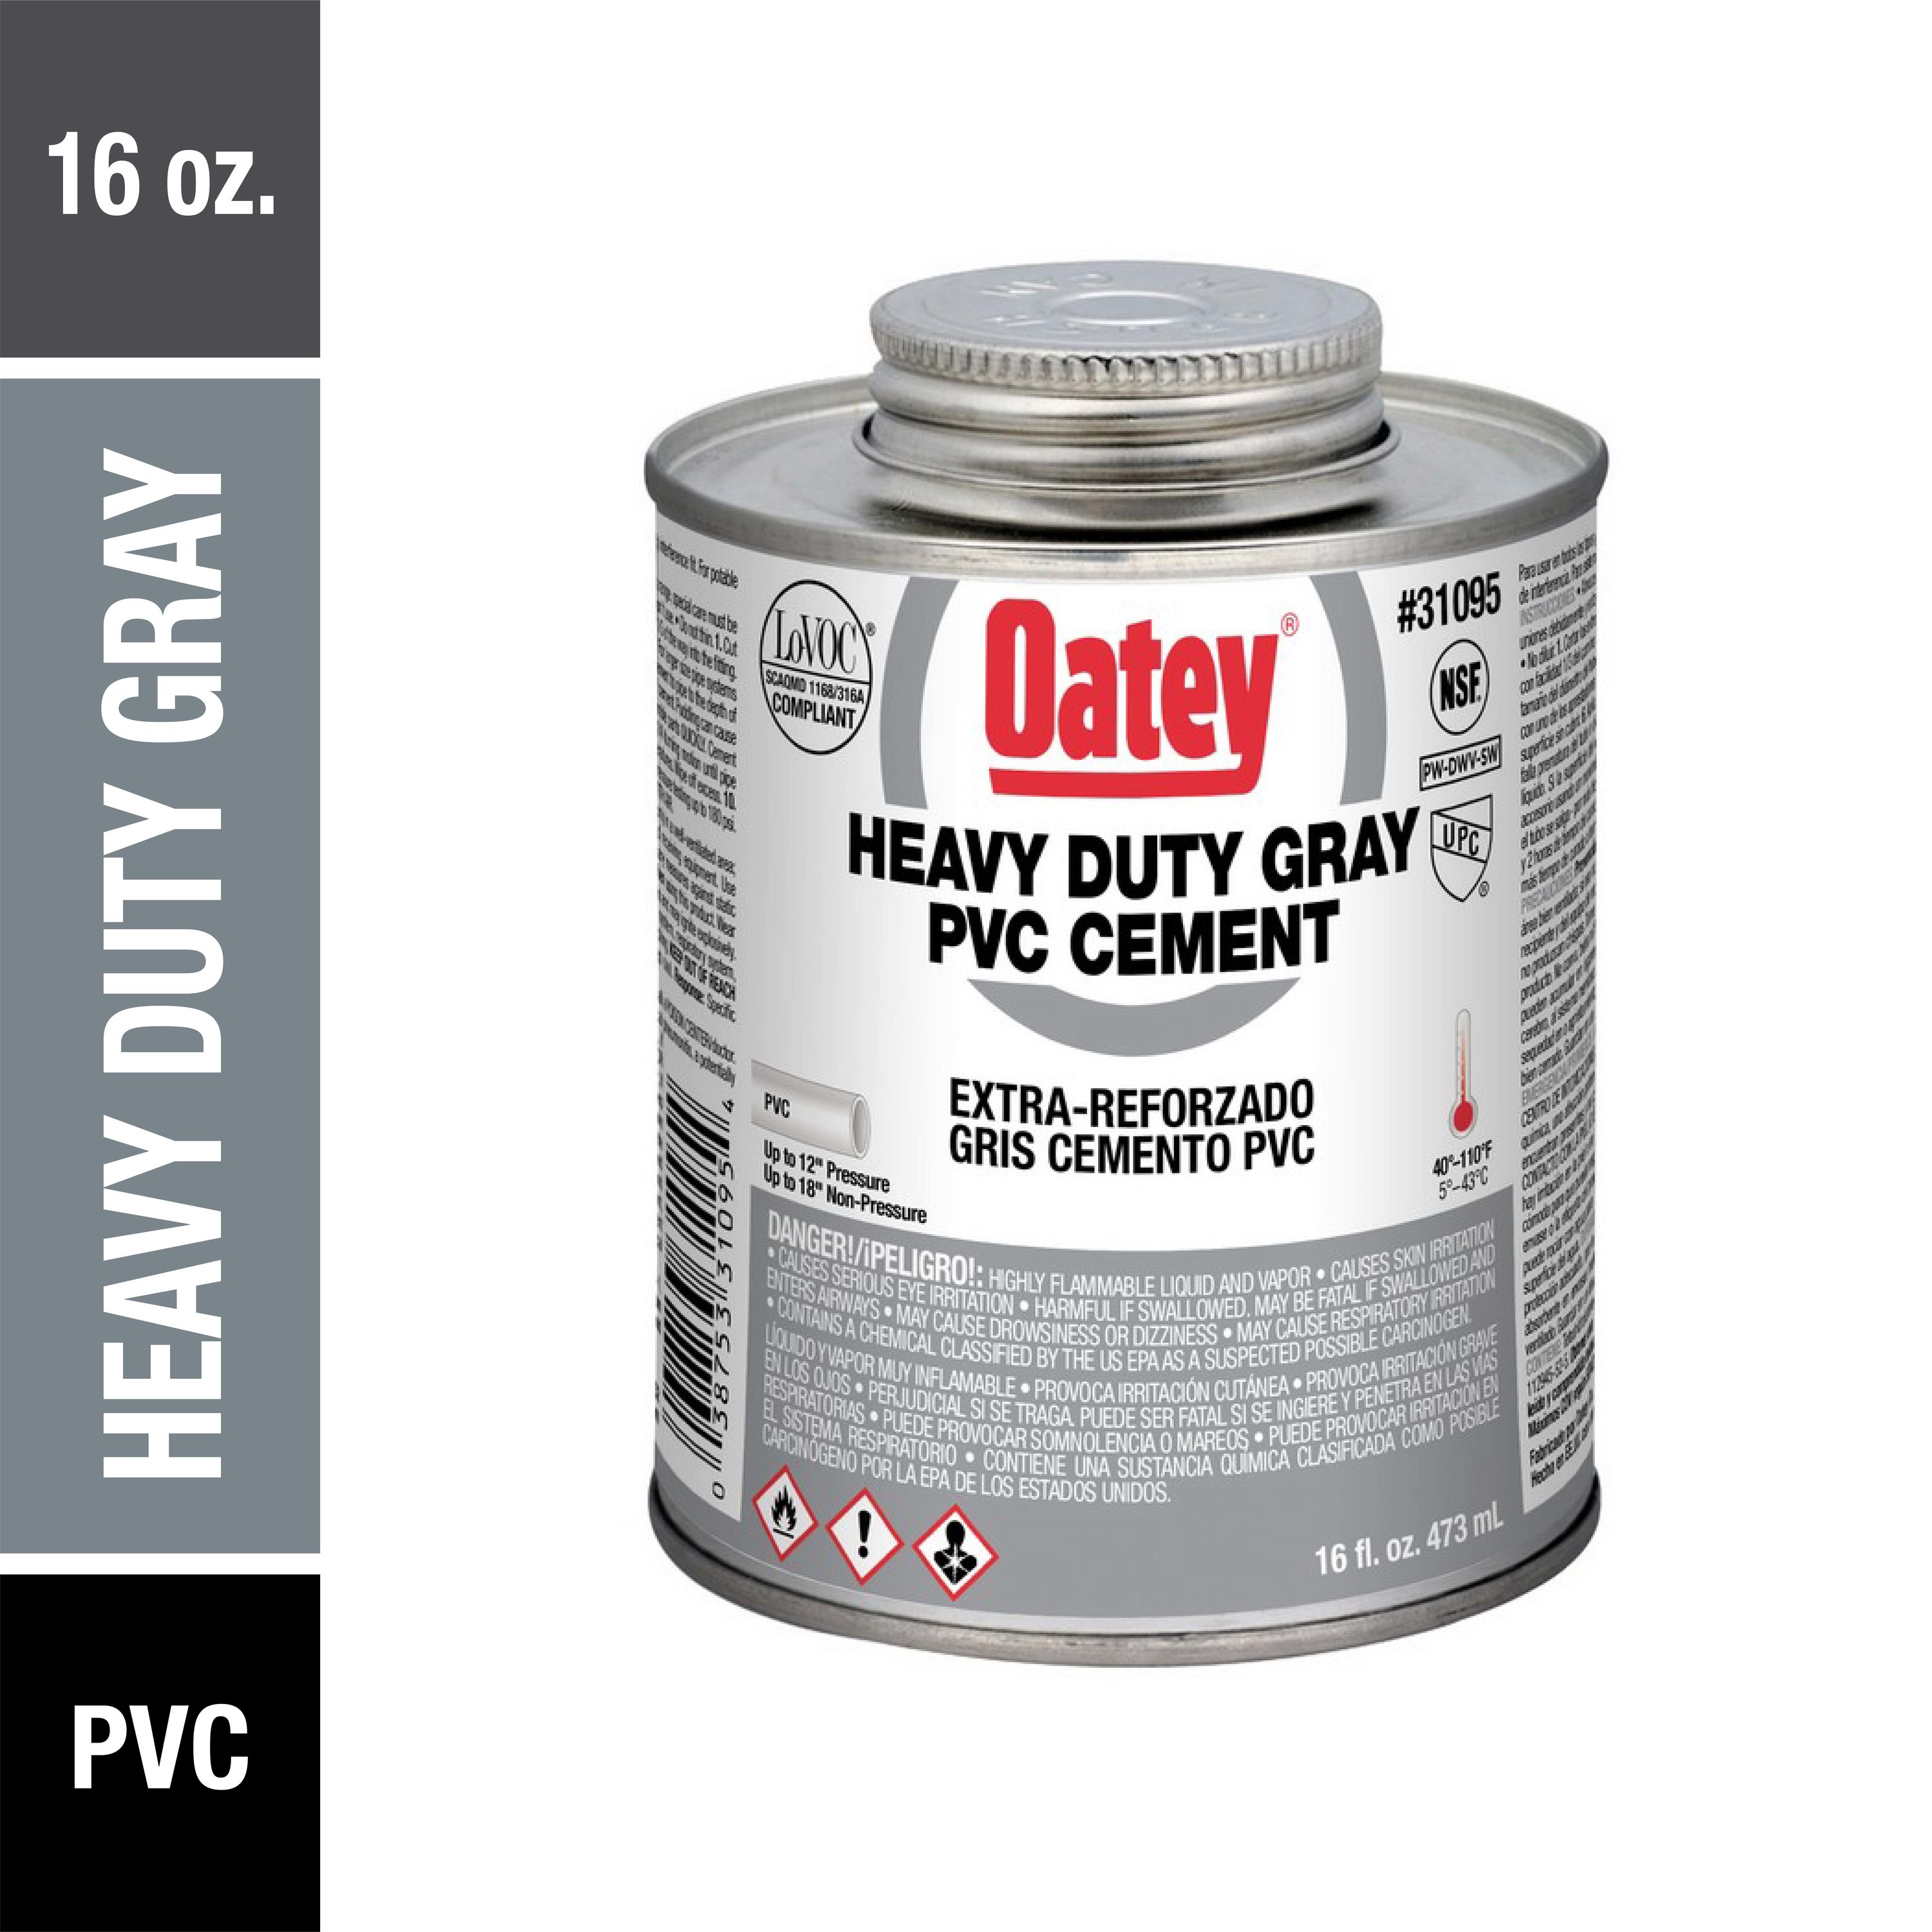 Oatey Rain-R-Shine 8 oz. Medium Blue PVC Cement 308913 - The Home Depot